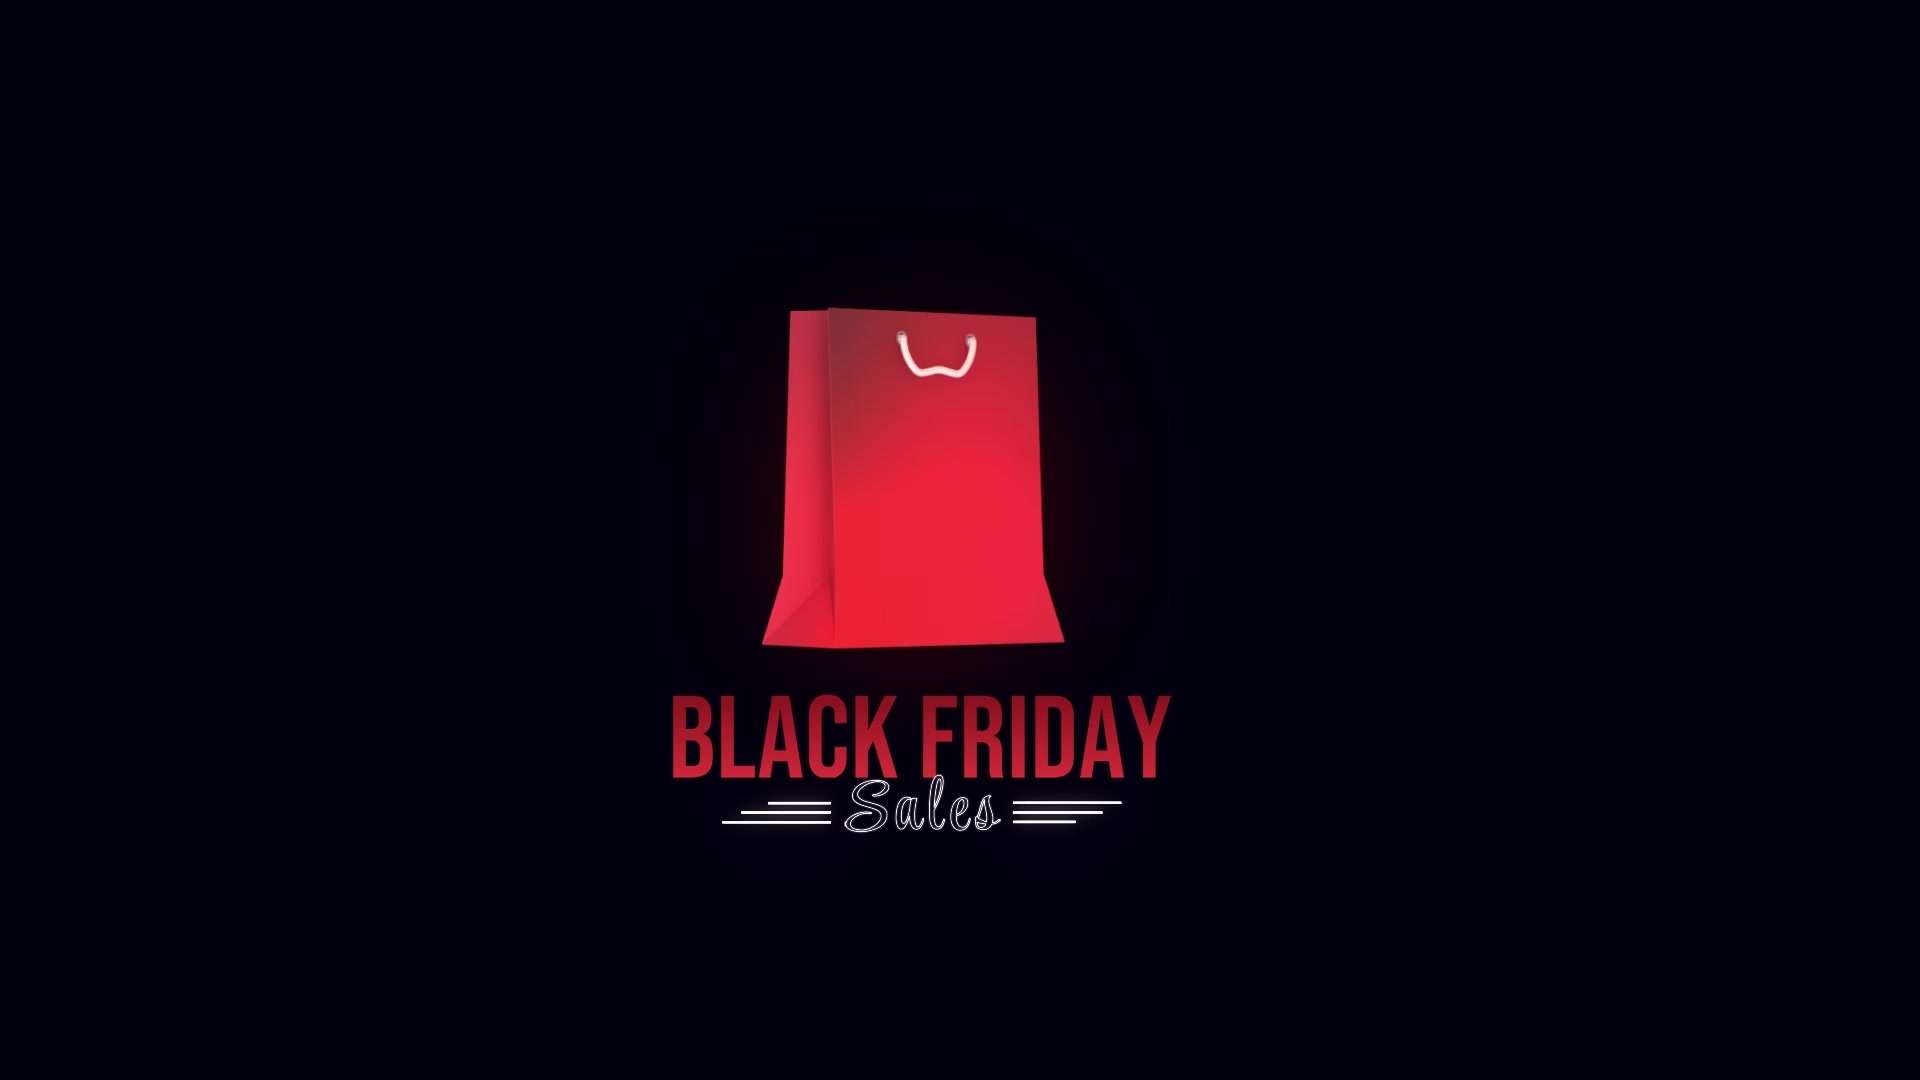 Black Friday Sales Titles Videohive 34759764 DaVinci Resolve Image 3